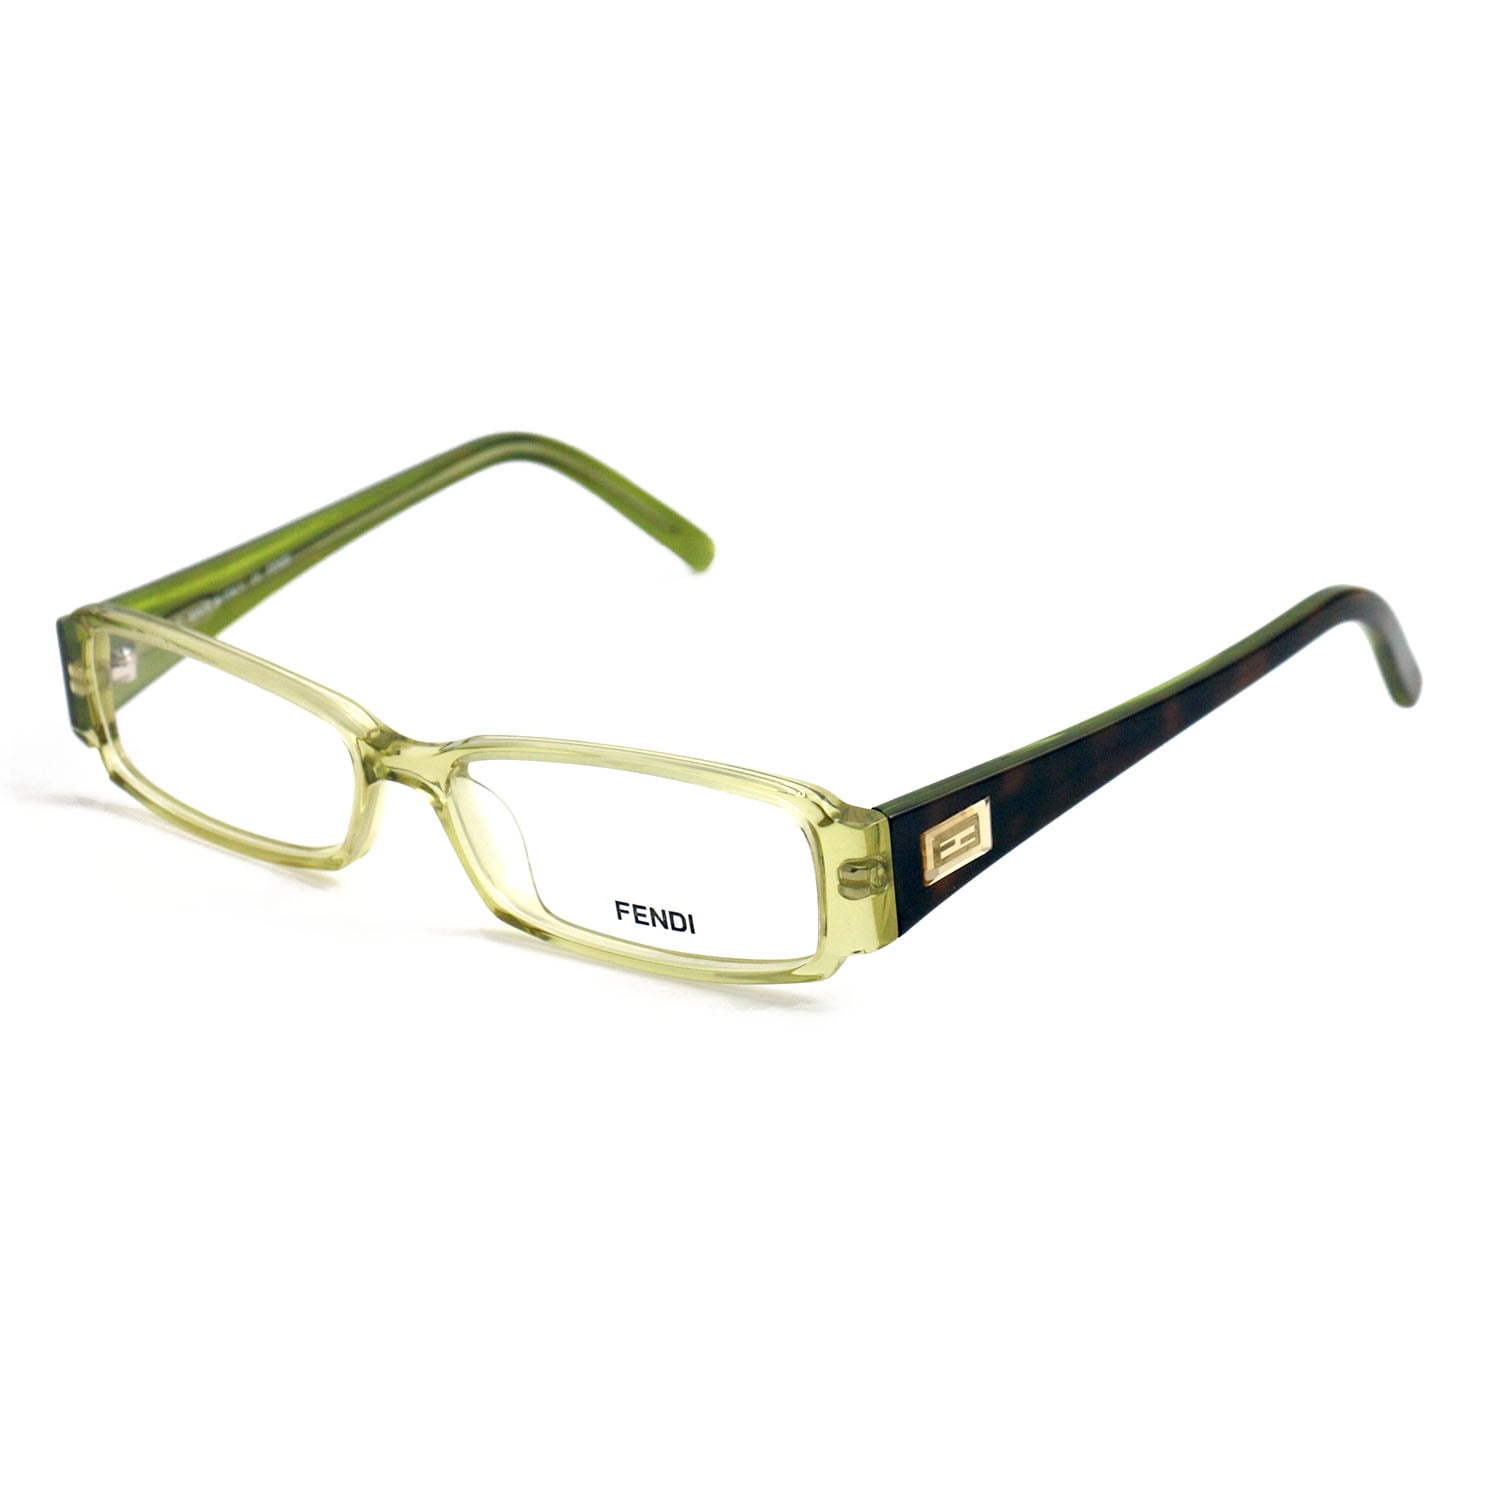 Fendi Eyeglasses Womens Clear Green Frames Rectangle 52 14 135 F891 315 ...